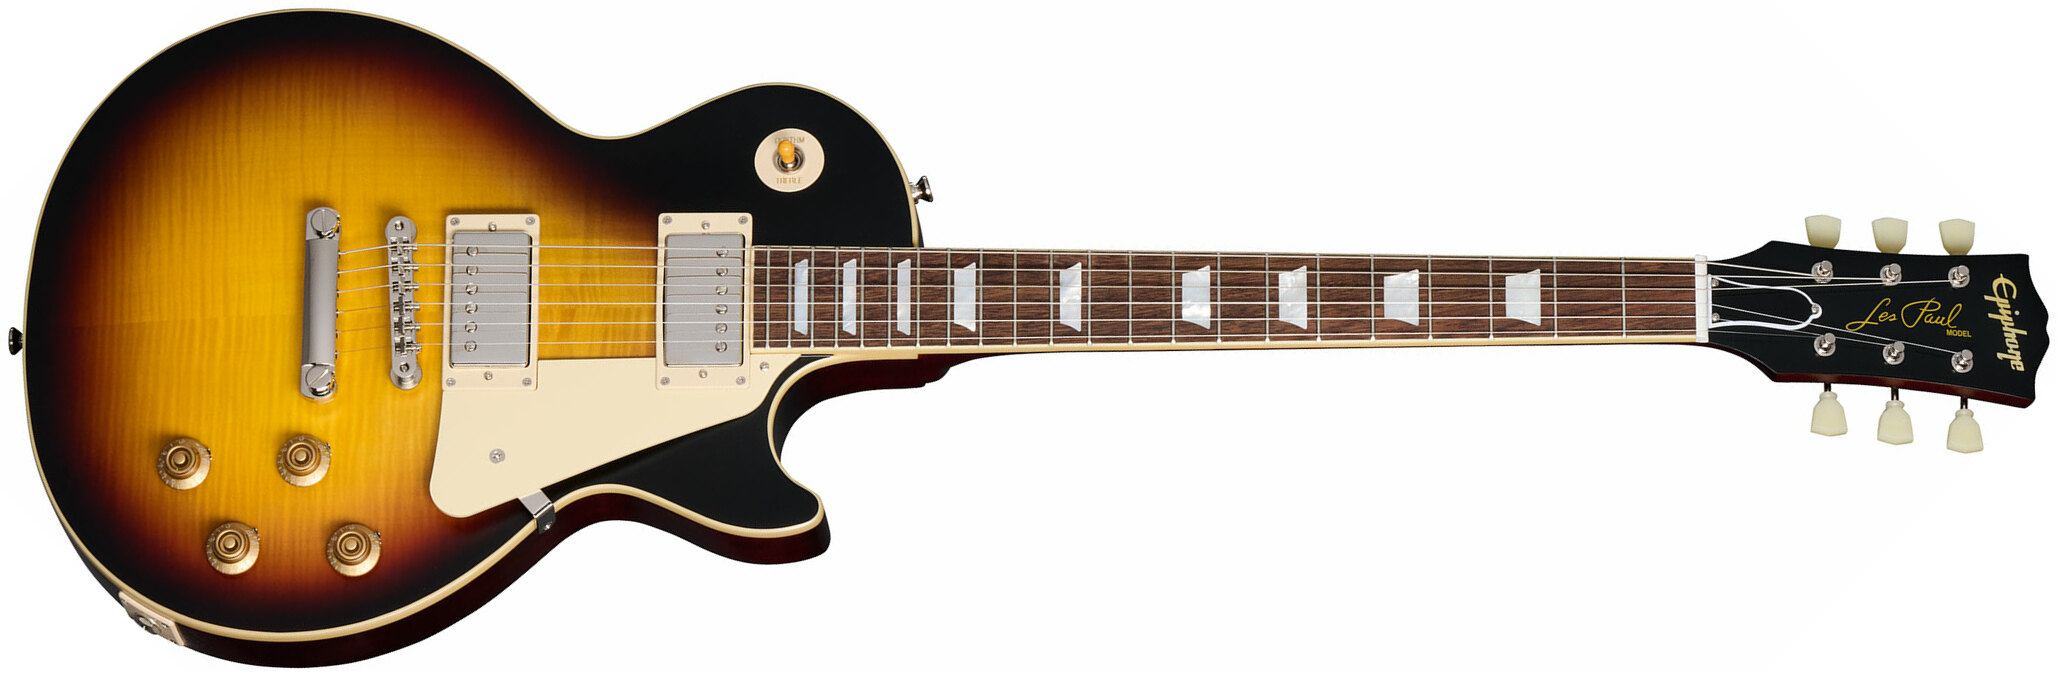 Epiphone 1959 Les Paul Standard Inspired By 2h Gibson Ht Lau - Vos Tobacco Burst - Enkel gesneden elektrische gitaar - Main picture